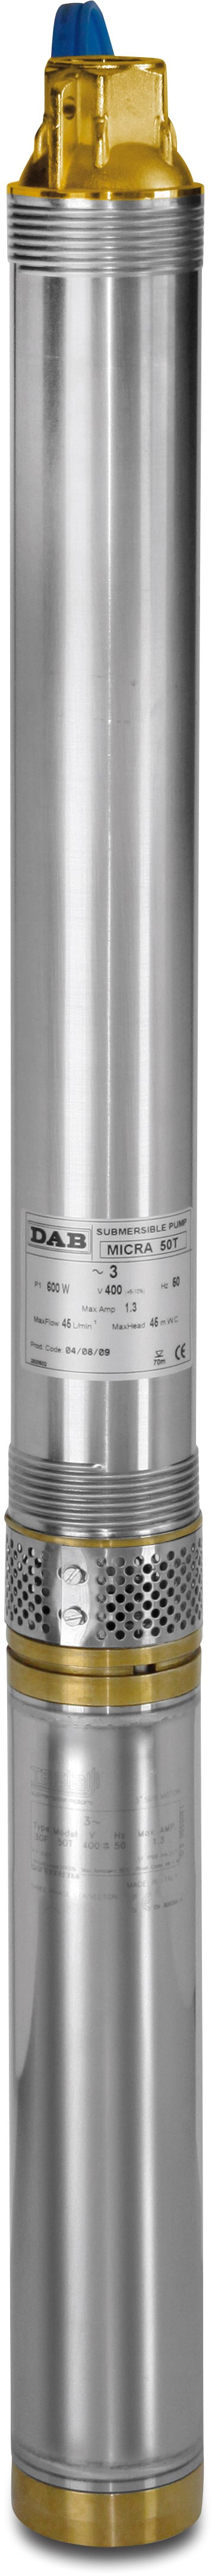 DAB Bronpomp RVS 304 1" binnendraad 3,3A 230VAC met 1m kabel type Micra 50M olie gevuld